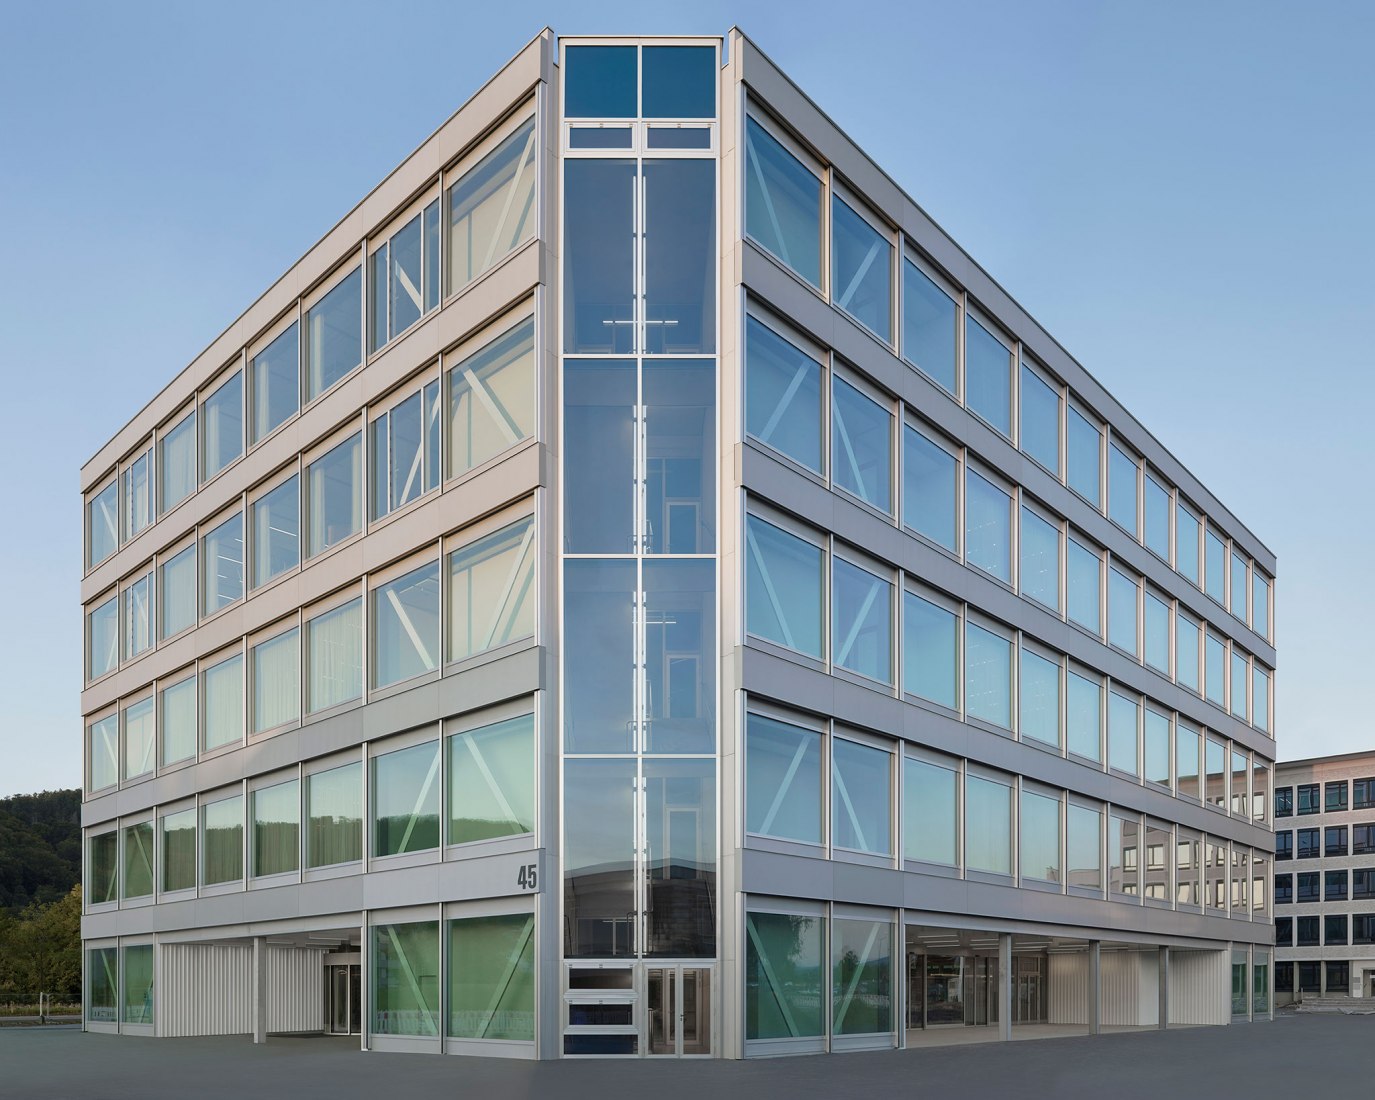 Roche Multifunctional Workspace Building by Christ & Gantenbein. Photograph by Walter Mair.